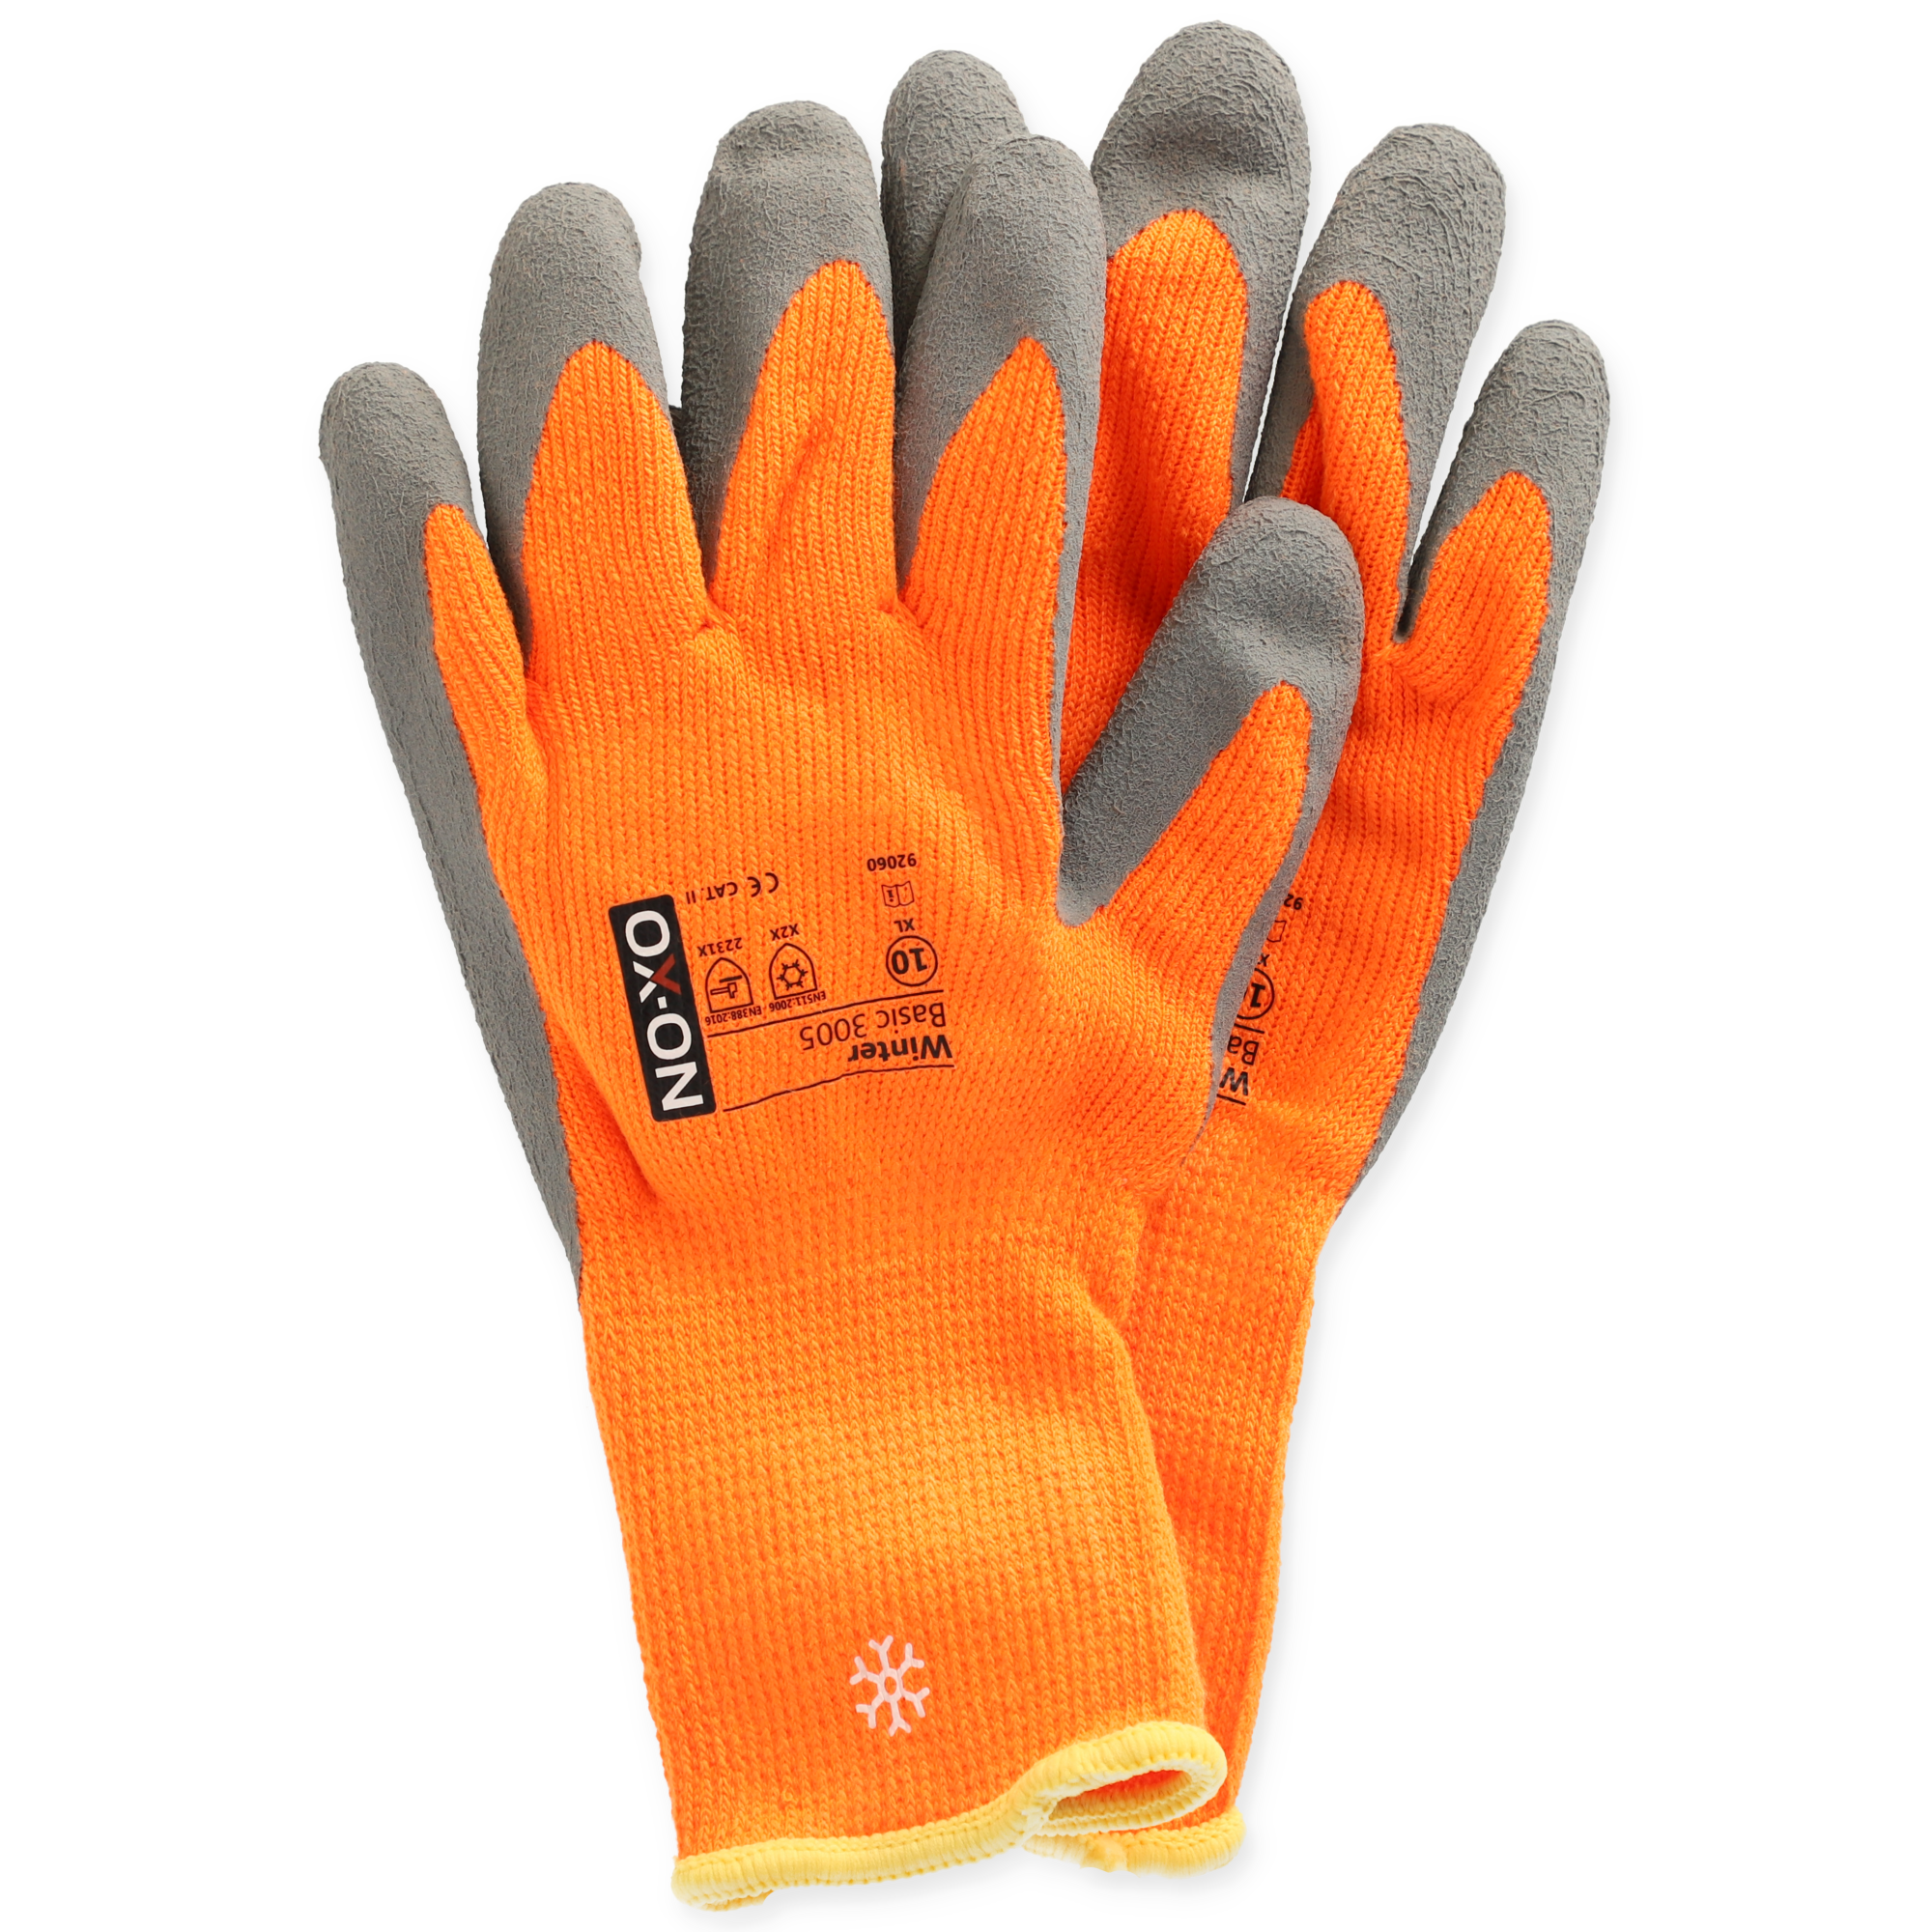 Handschuhe 'Basic 3005' orange Gr. 10 + product picture